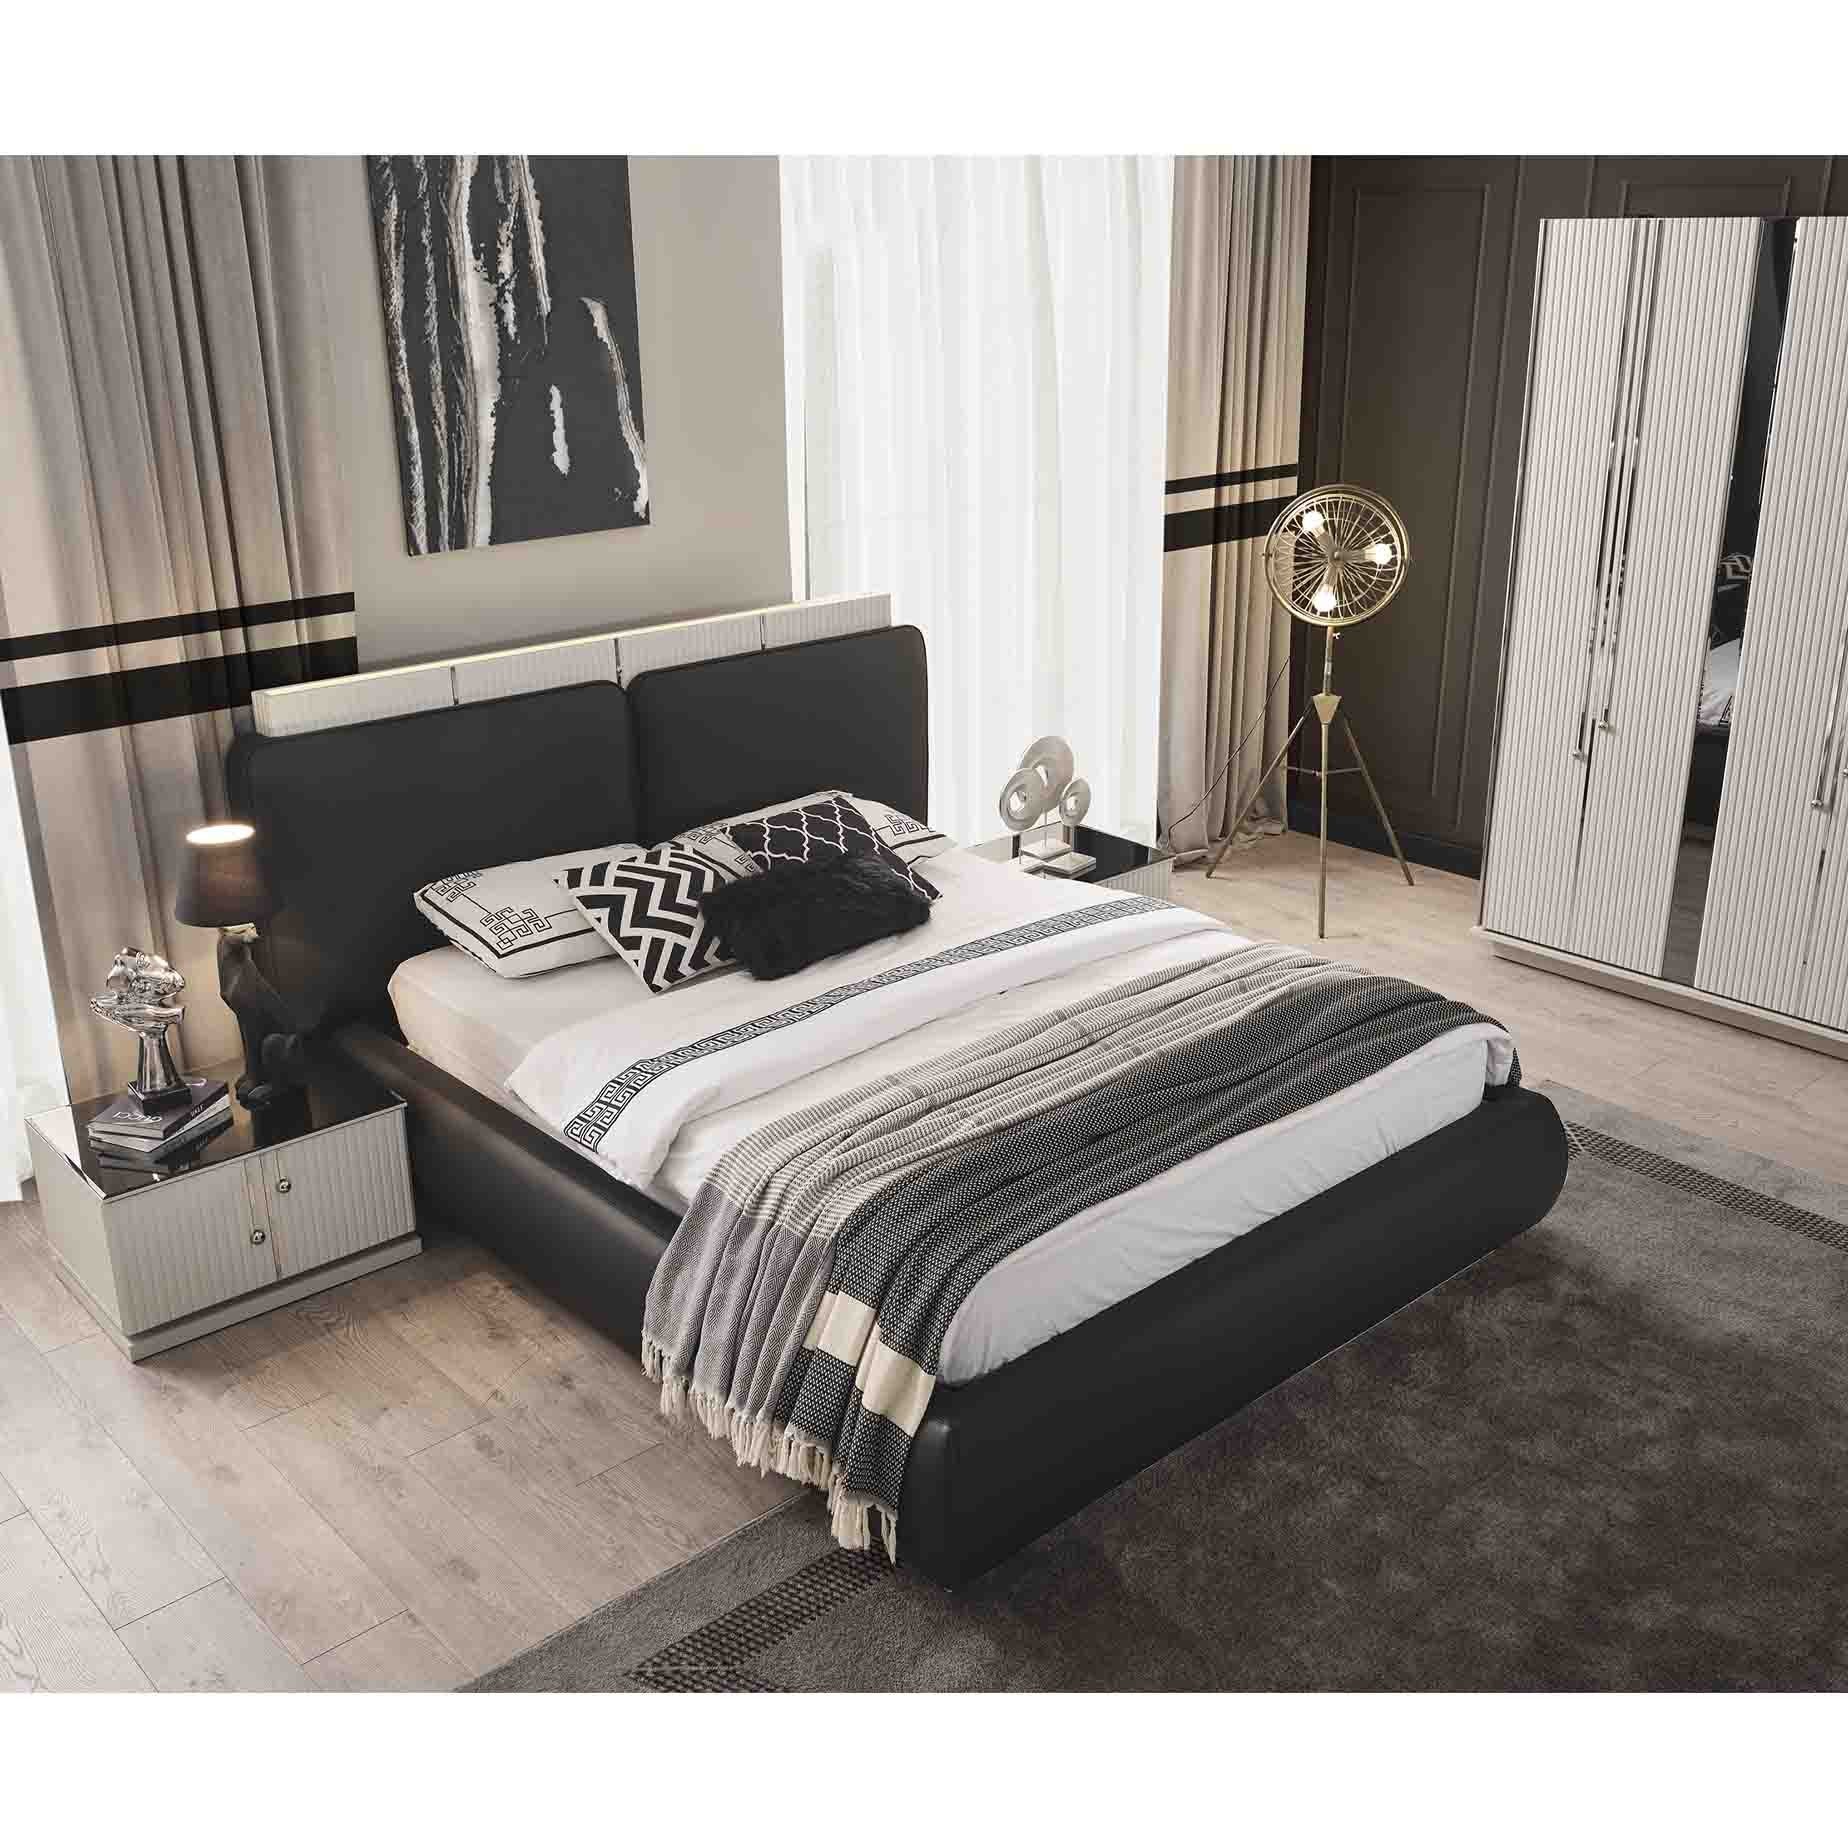 Vizyon 180x200cm Bed With Storage